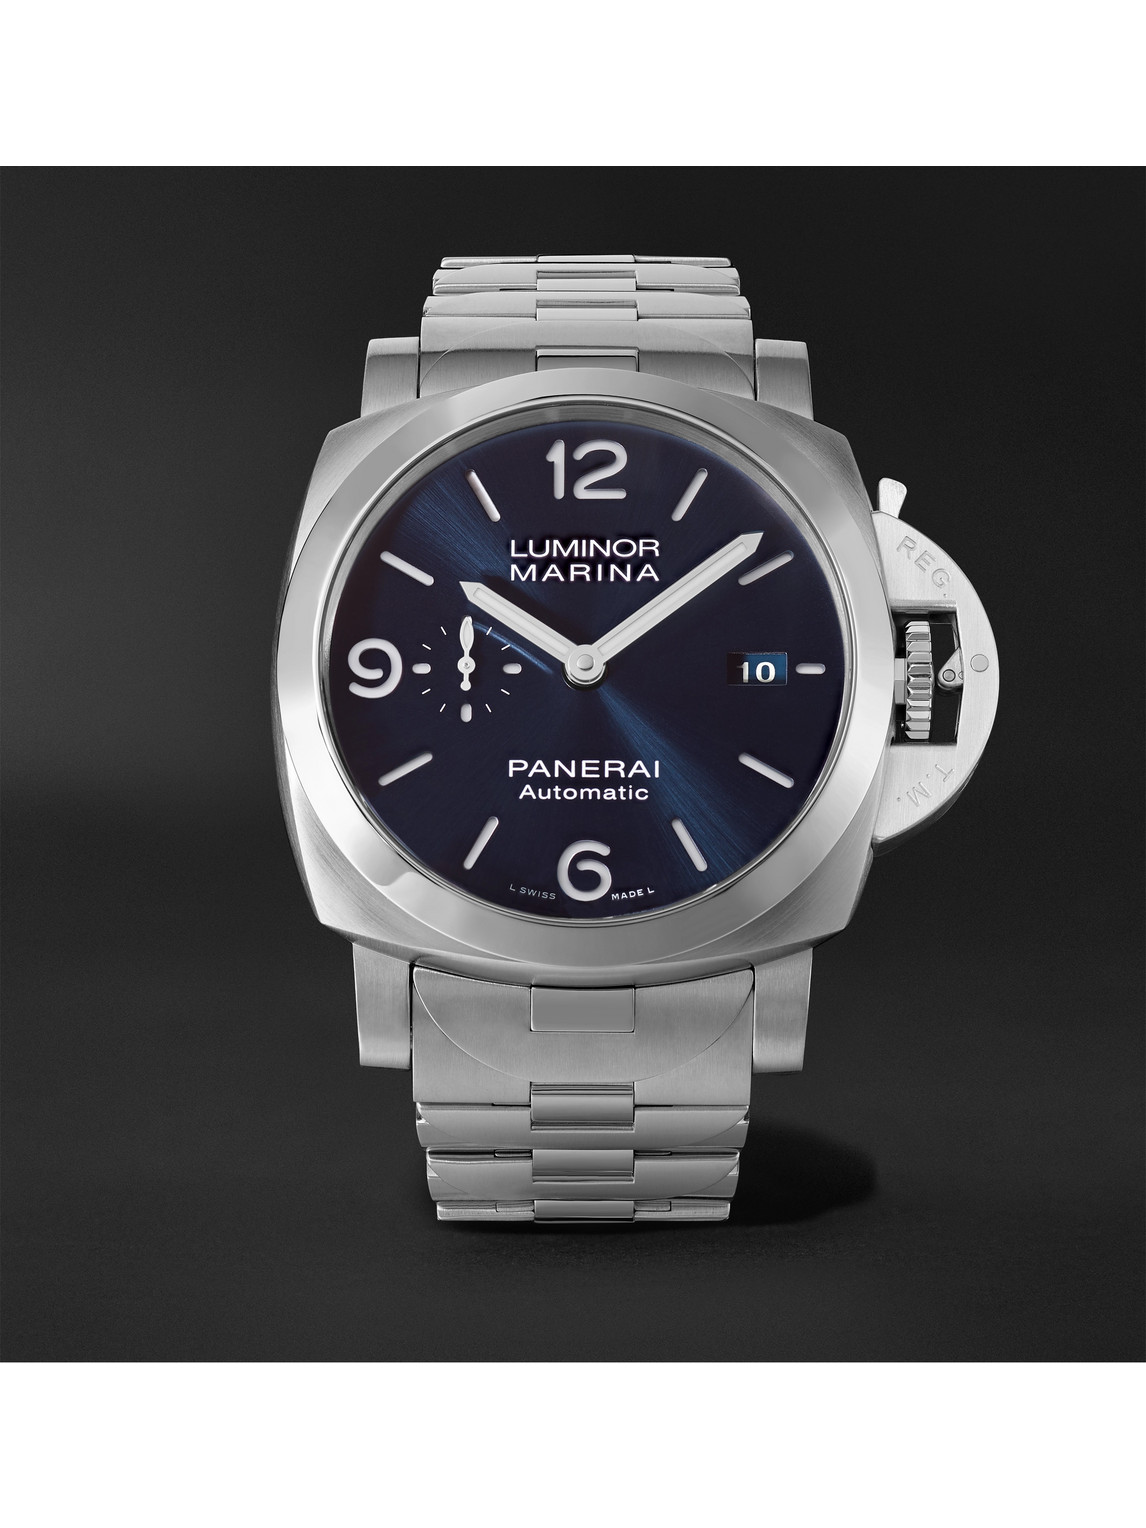 Panerai Luminor Marina Specchio Blu Automatic 44mm Stainless Steel Watch, Ref. No. Pam01316 In Blue